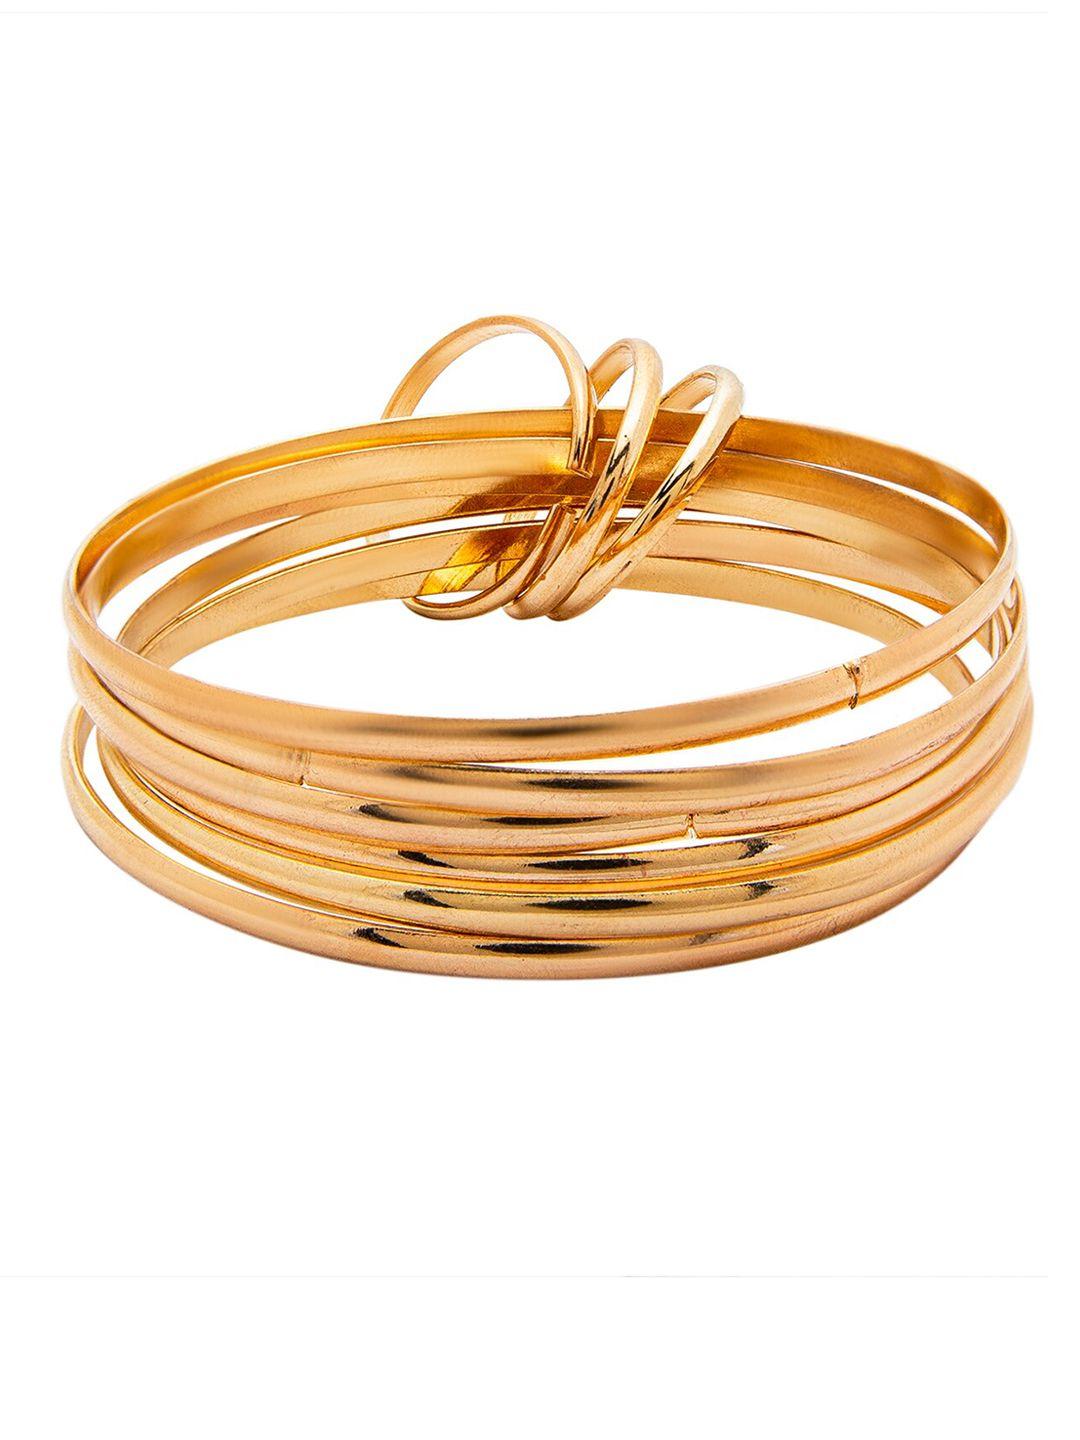 shining-jewel---by-shivansh-gold-plated-gold-toned-bangle